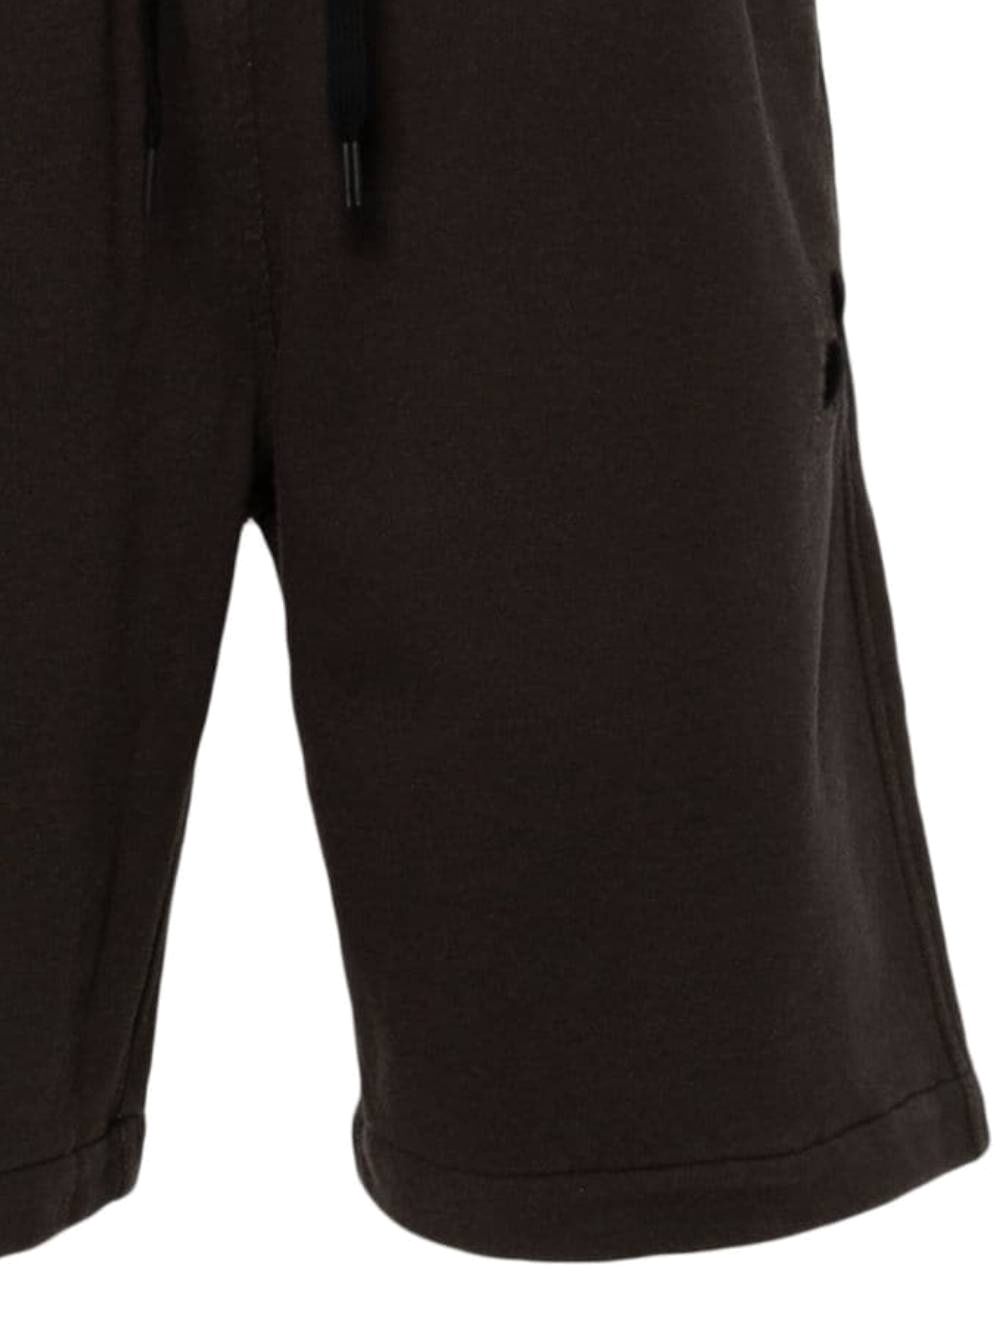 Black cotton blend Bermuda shorts